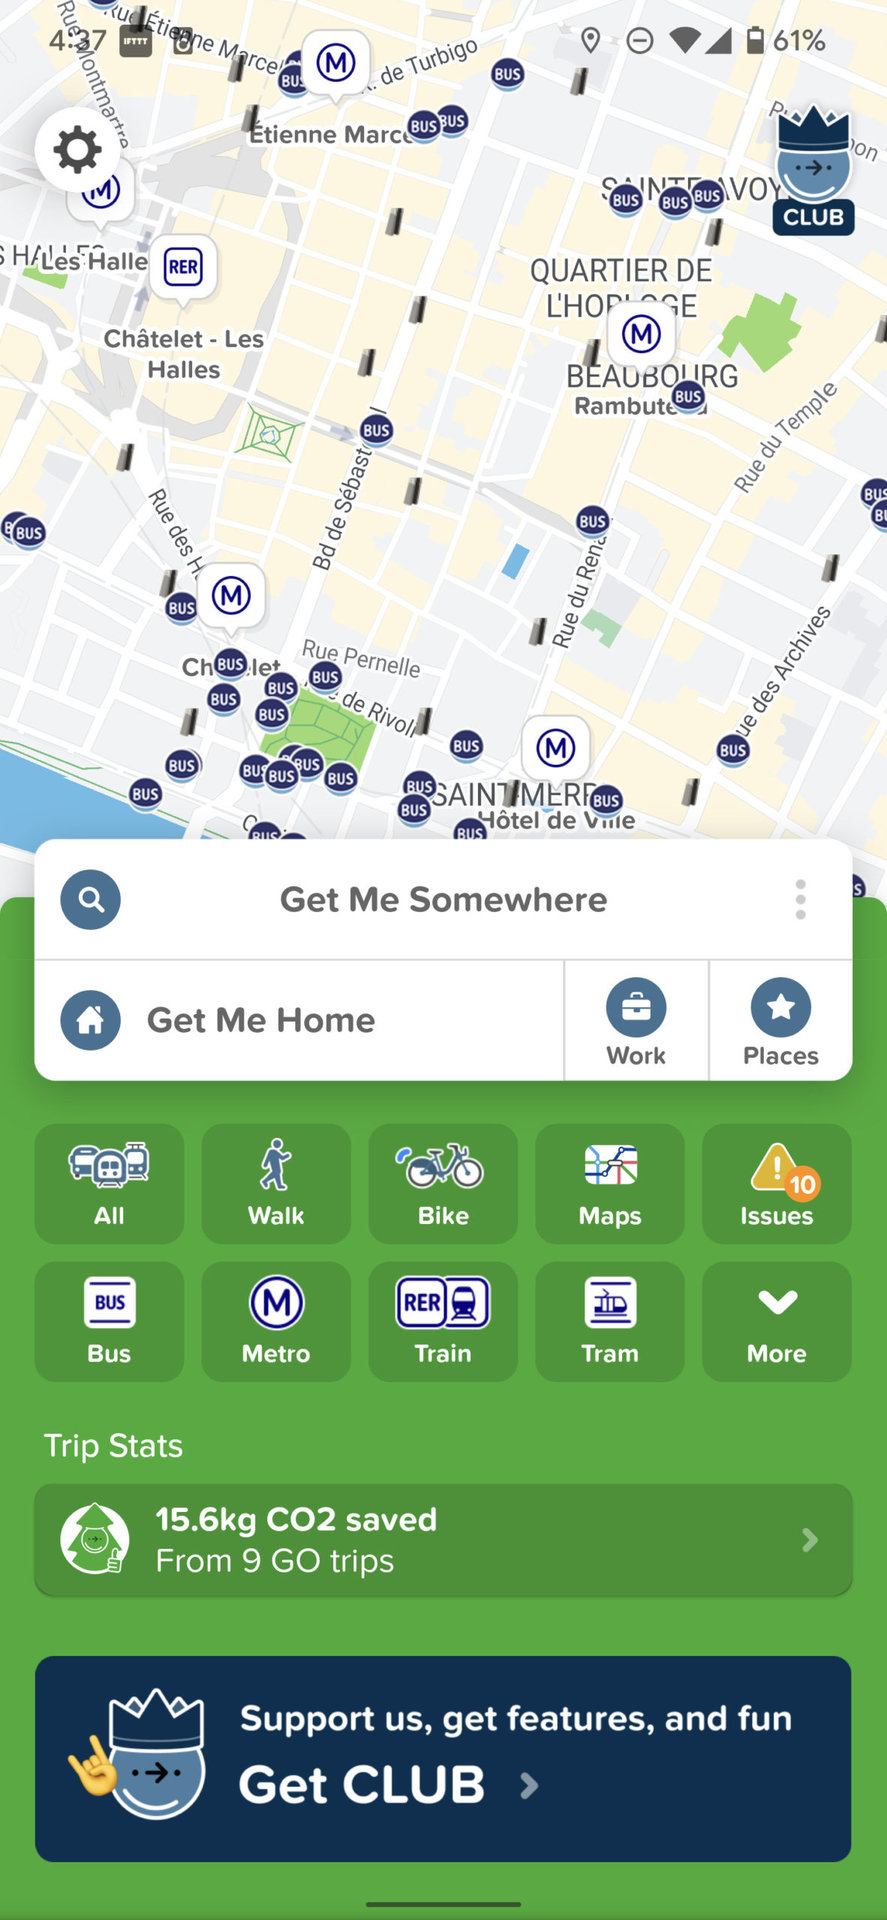 citymapper transit app get me somewhere